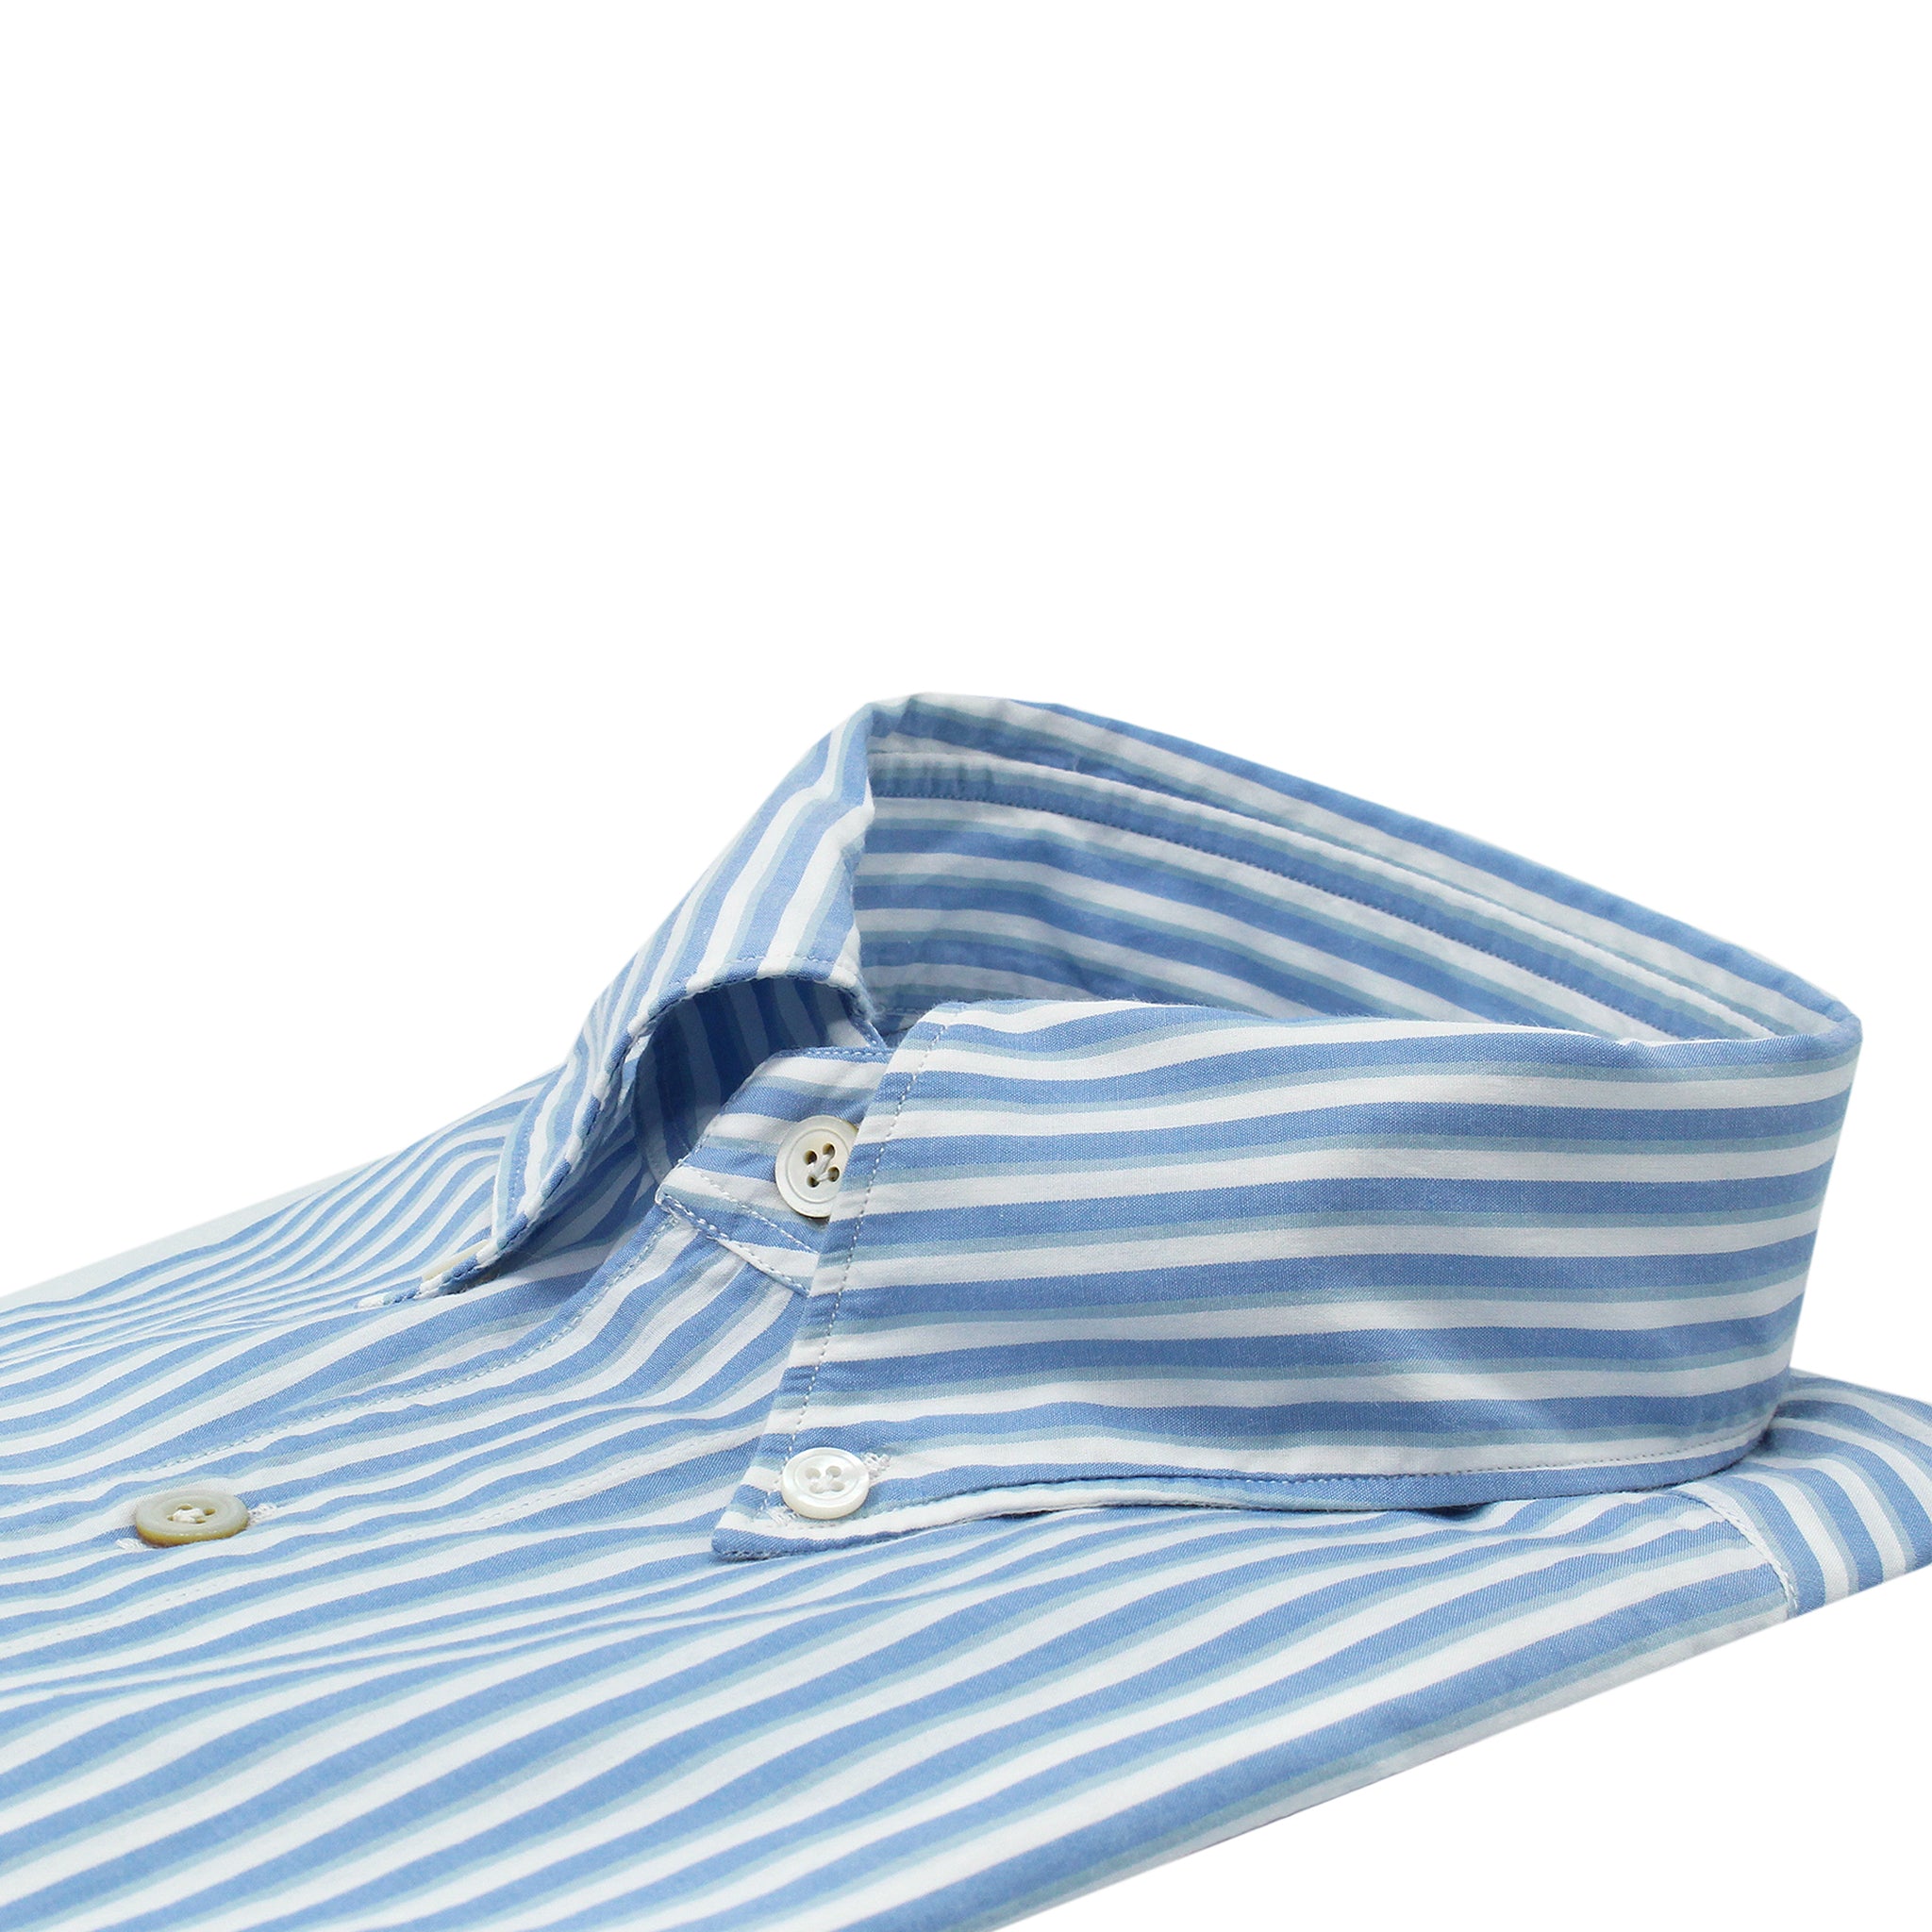 Tokyo slim shirt in cotton wide stripe shades of light blue